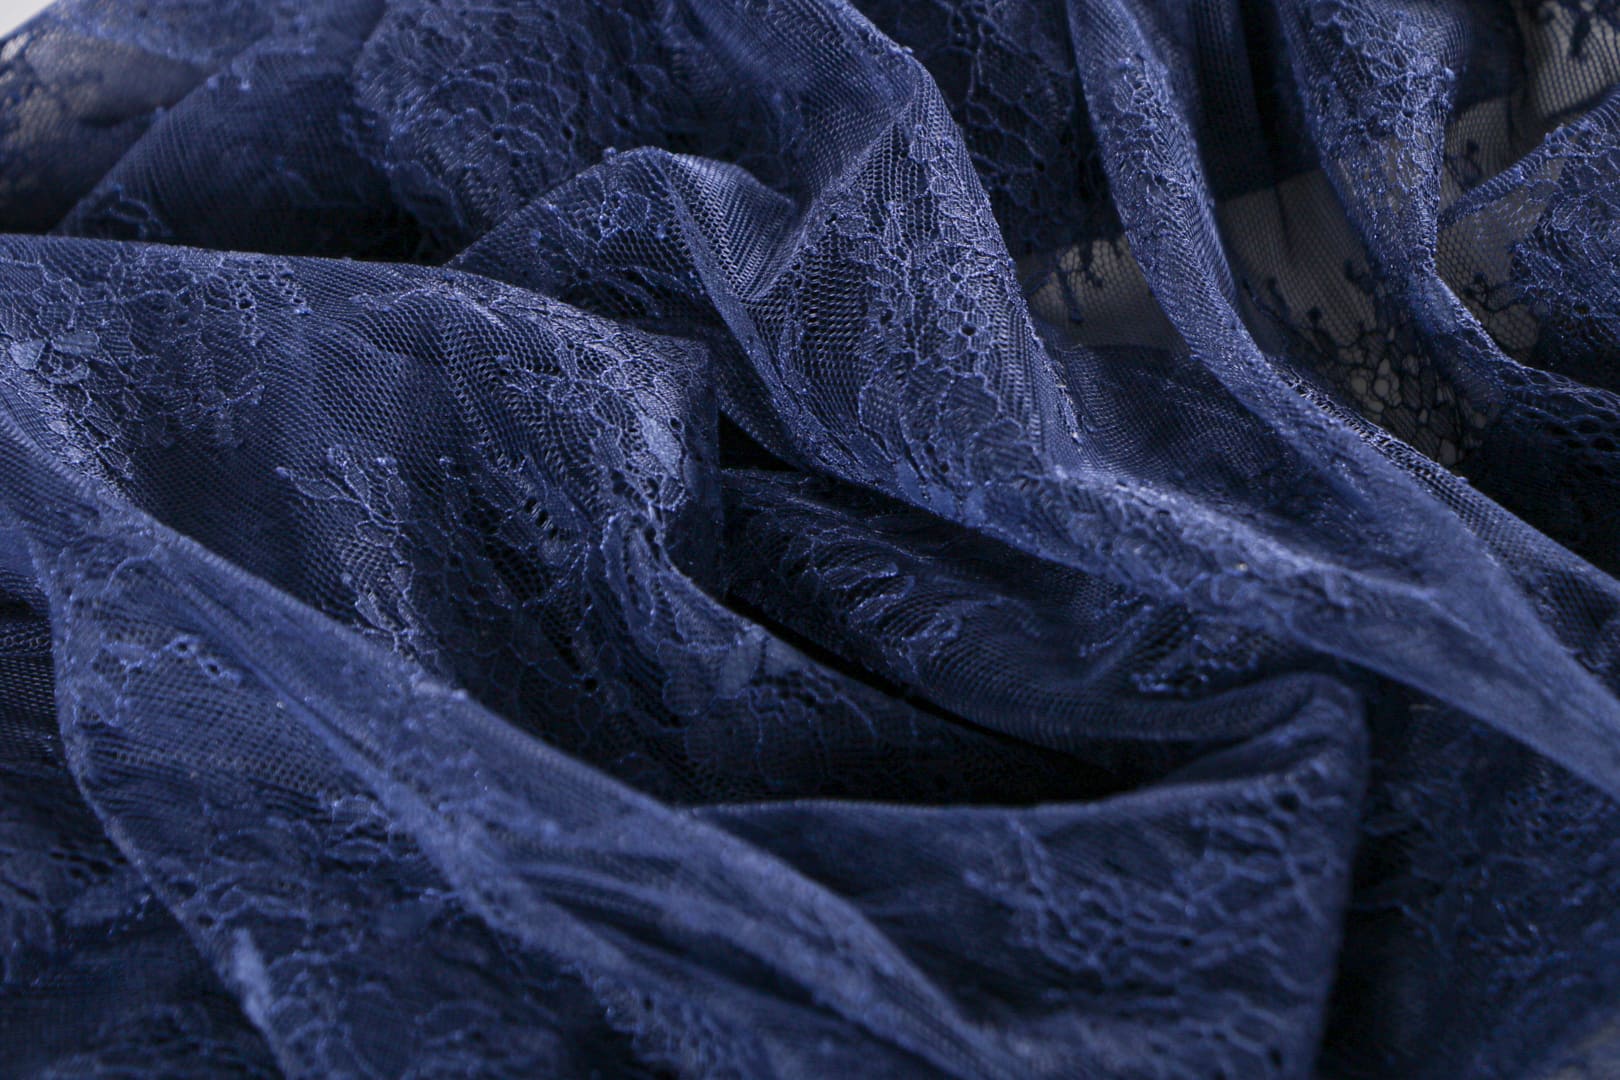 Tissu Bleu en Polyester pour vêtements